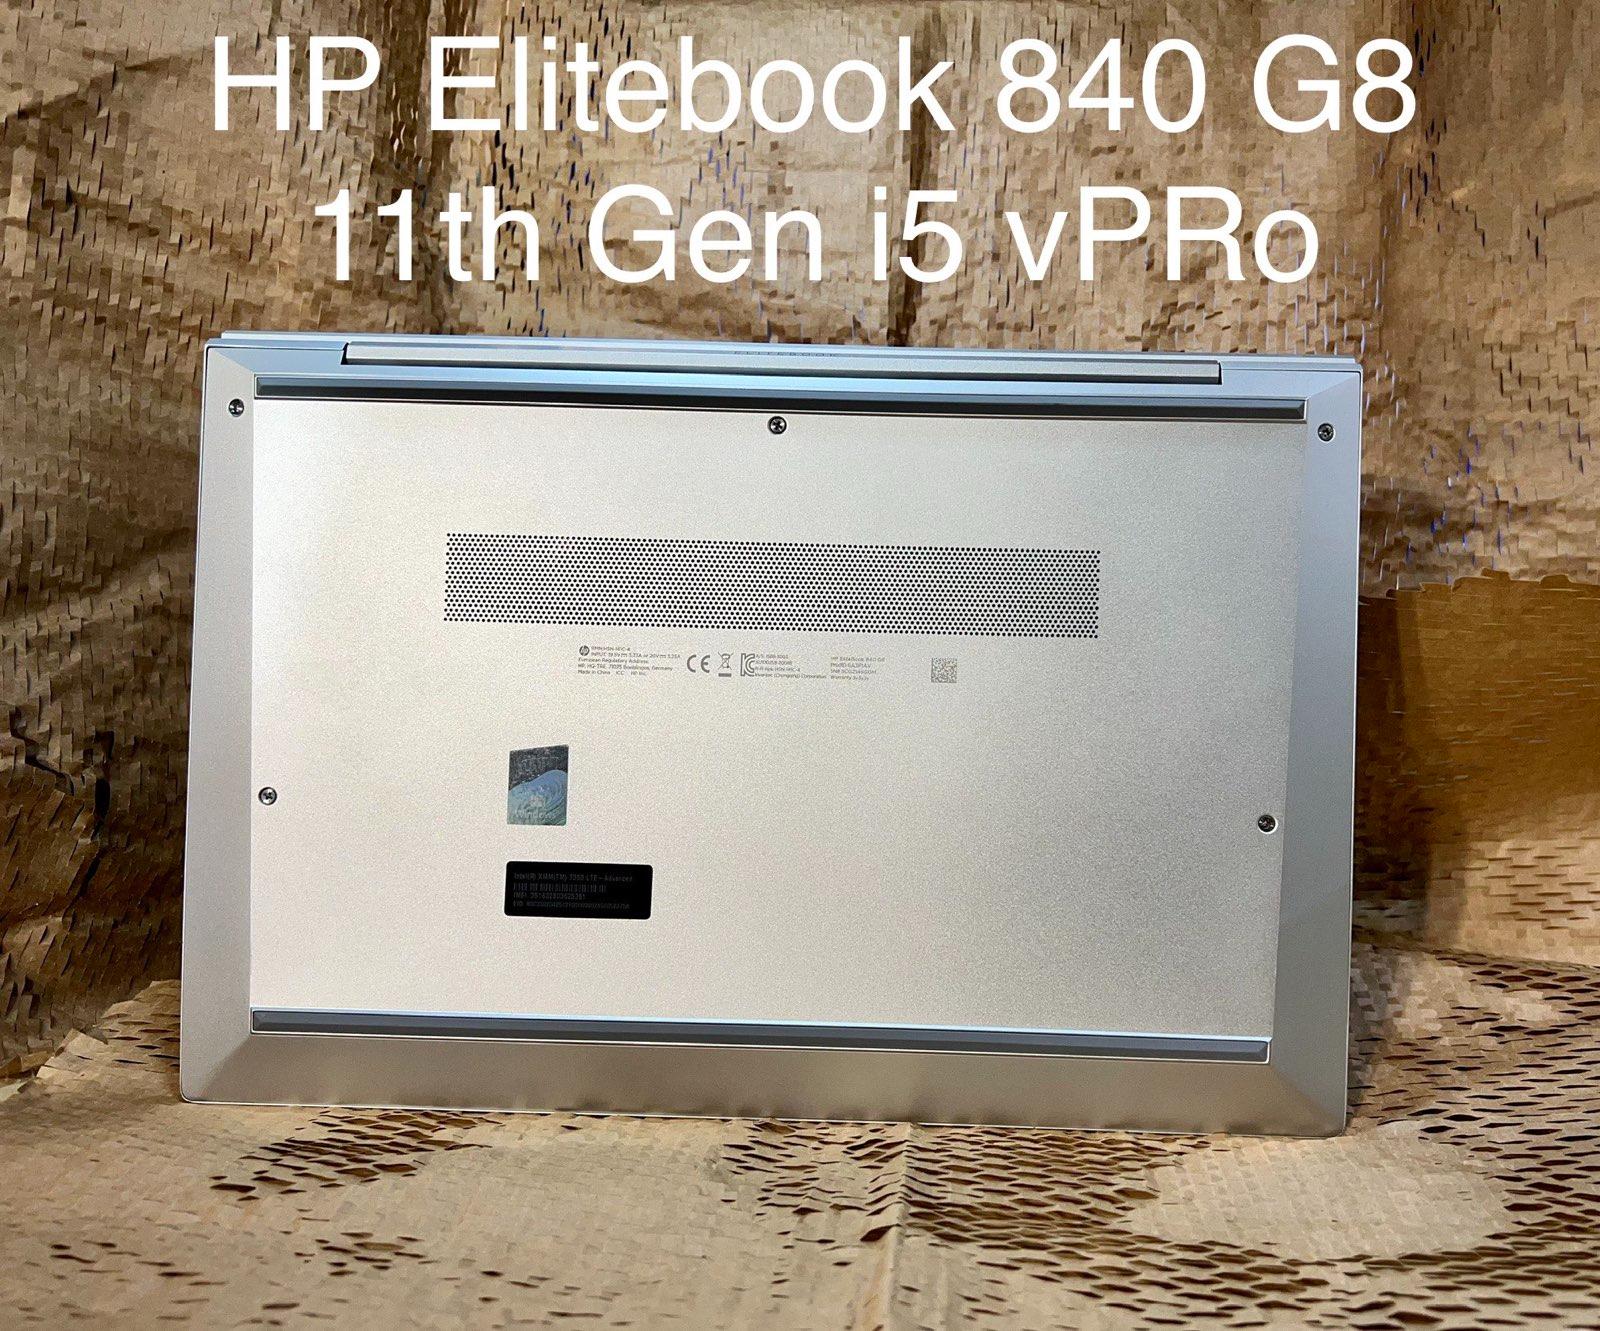 HP Elitebook 840, G8, 16GB RAM , 512 SSD i5 (Used Laptop)